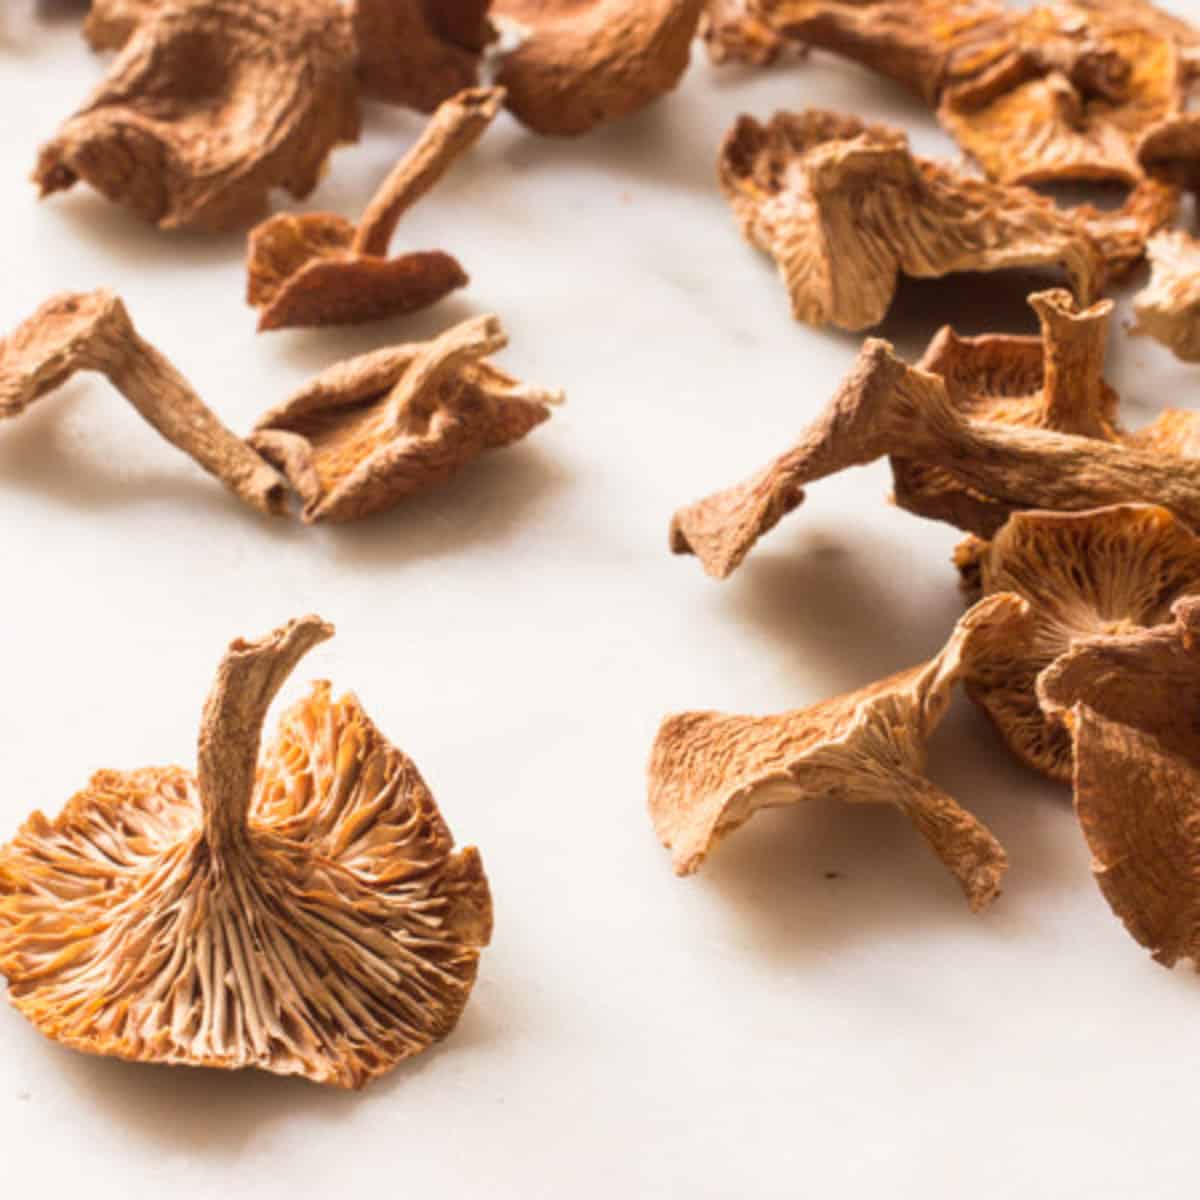 Dried candy cap mushrooms or Lactarius rubidus 